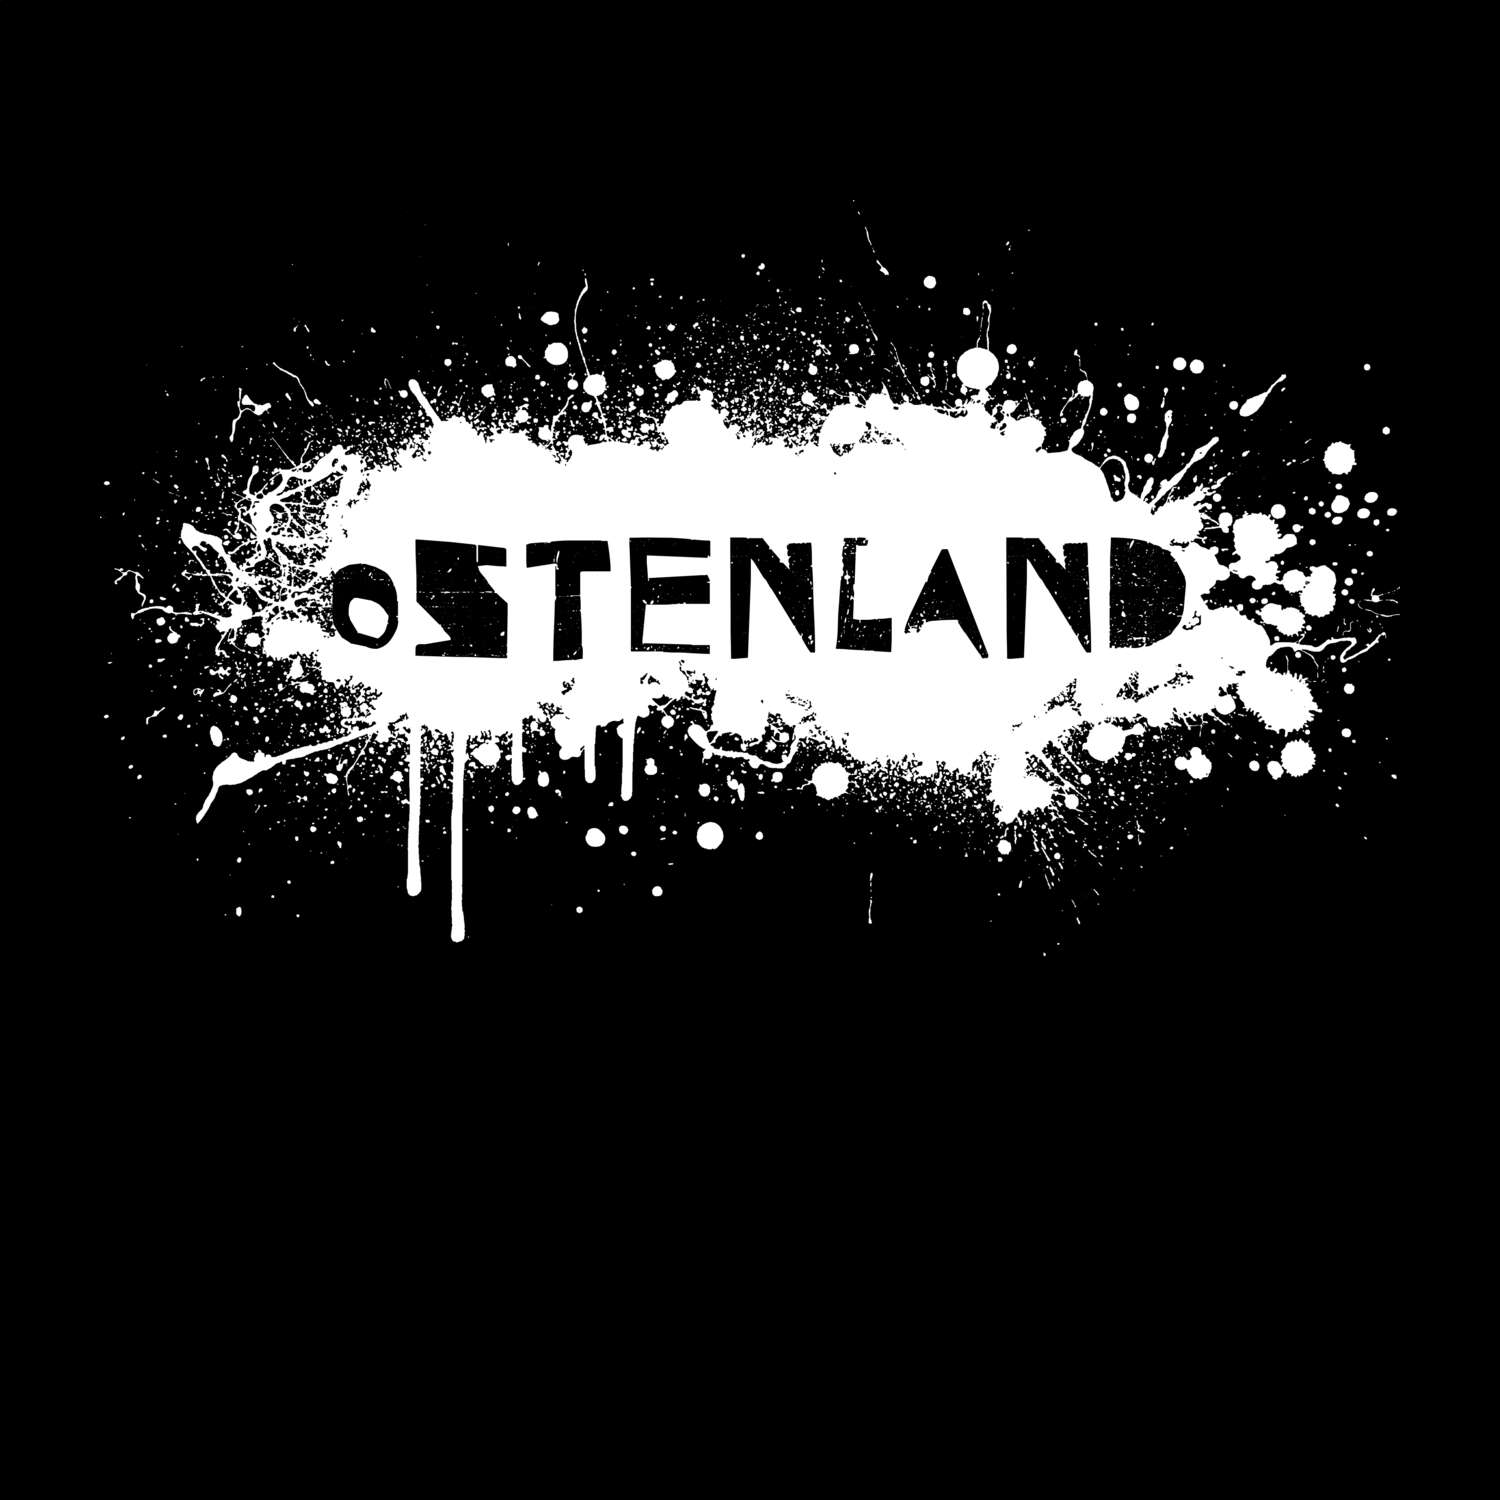 Ostenland T-Shirt »Paint Splash Punk«